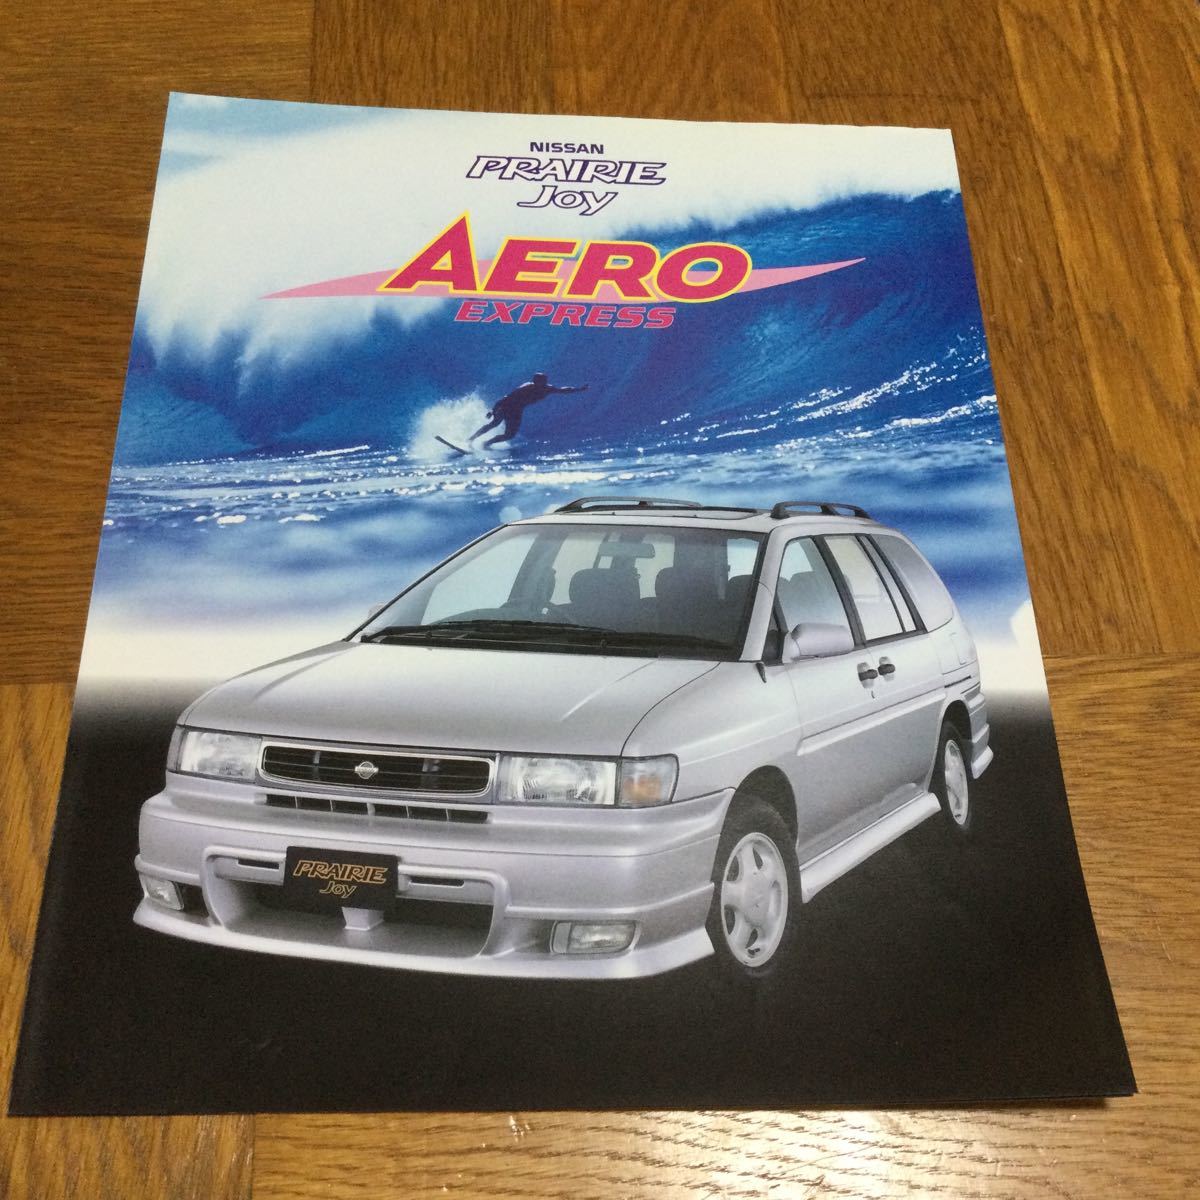 [ free shipping ] Nissan Prairie JOY aero Express catalog 1996 year 